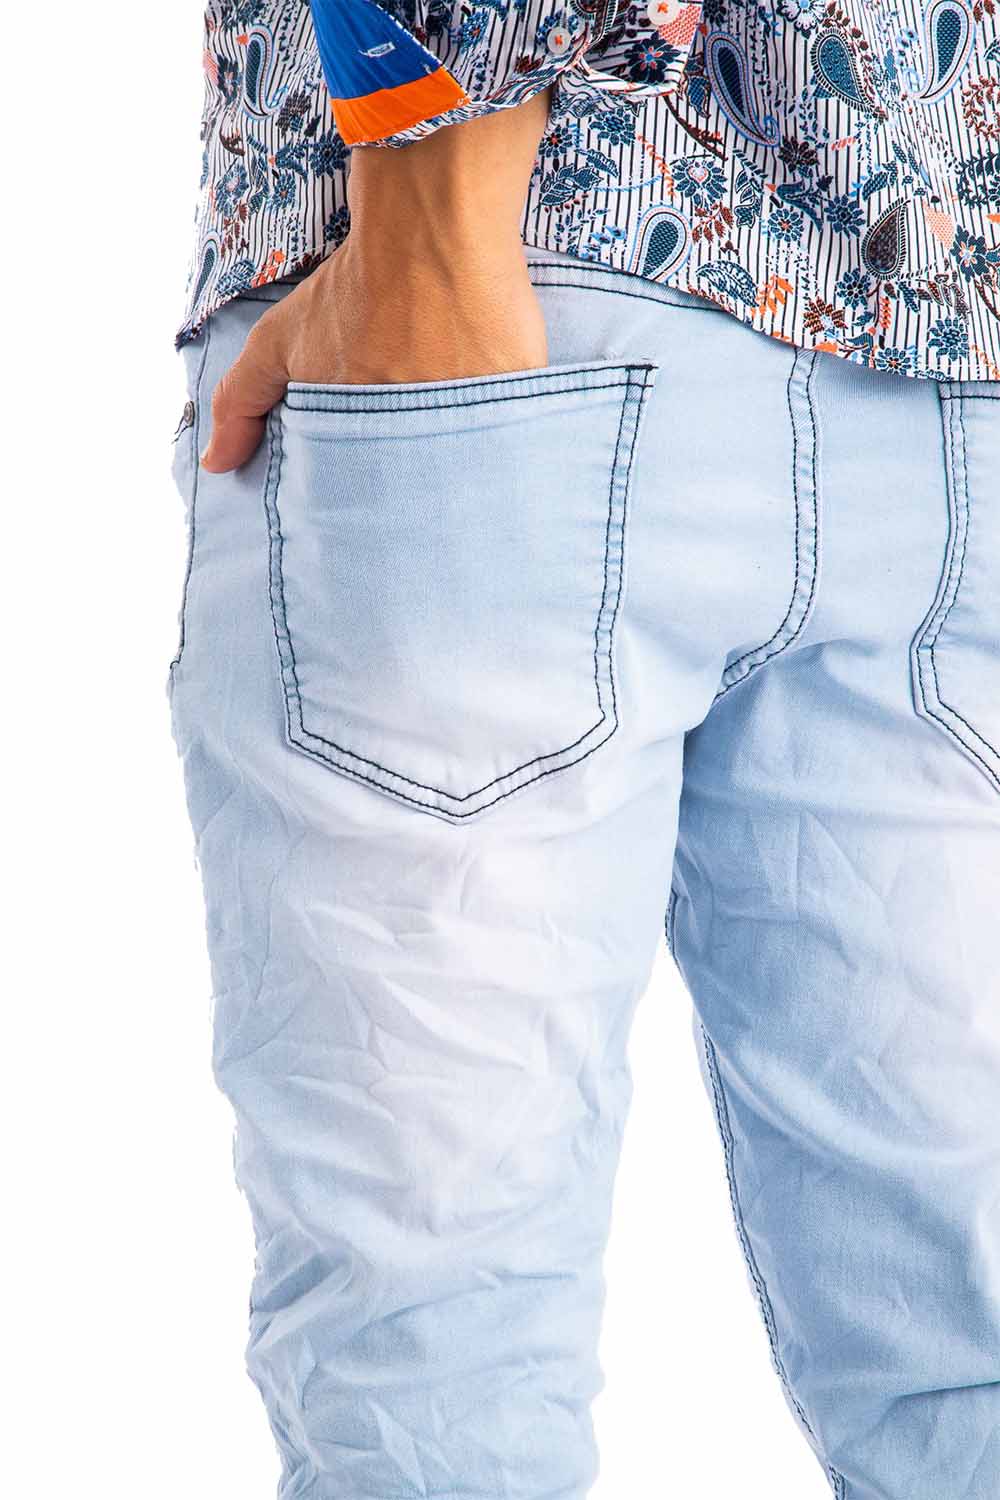 Barabas Men's Washed Straight Fit Distressed Denim Jeans SN8883 Light Blue